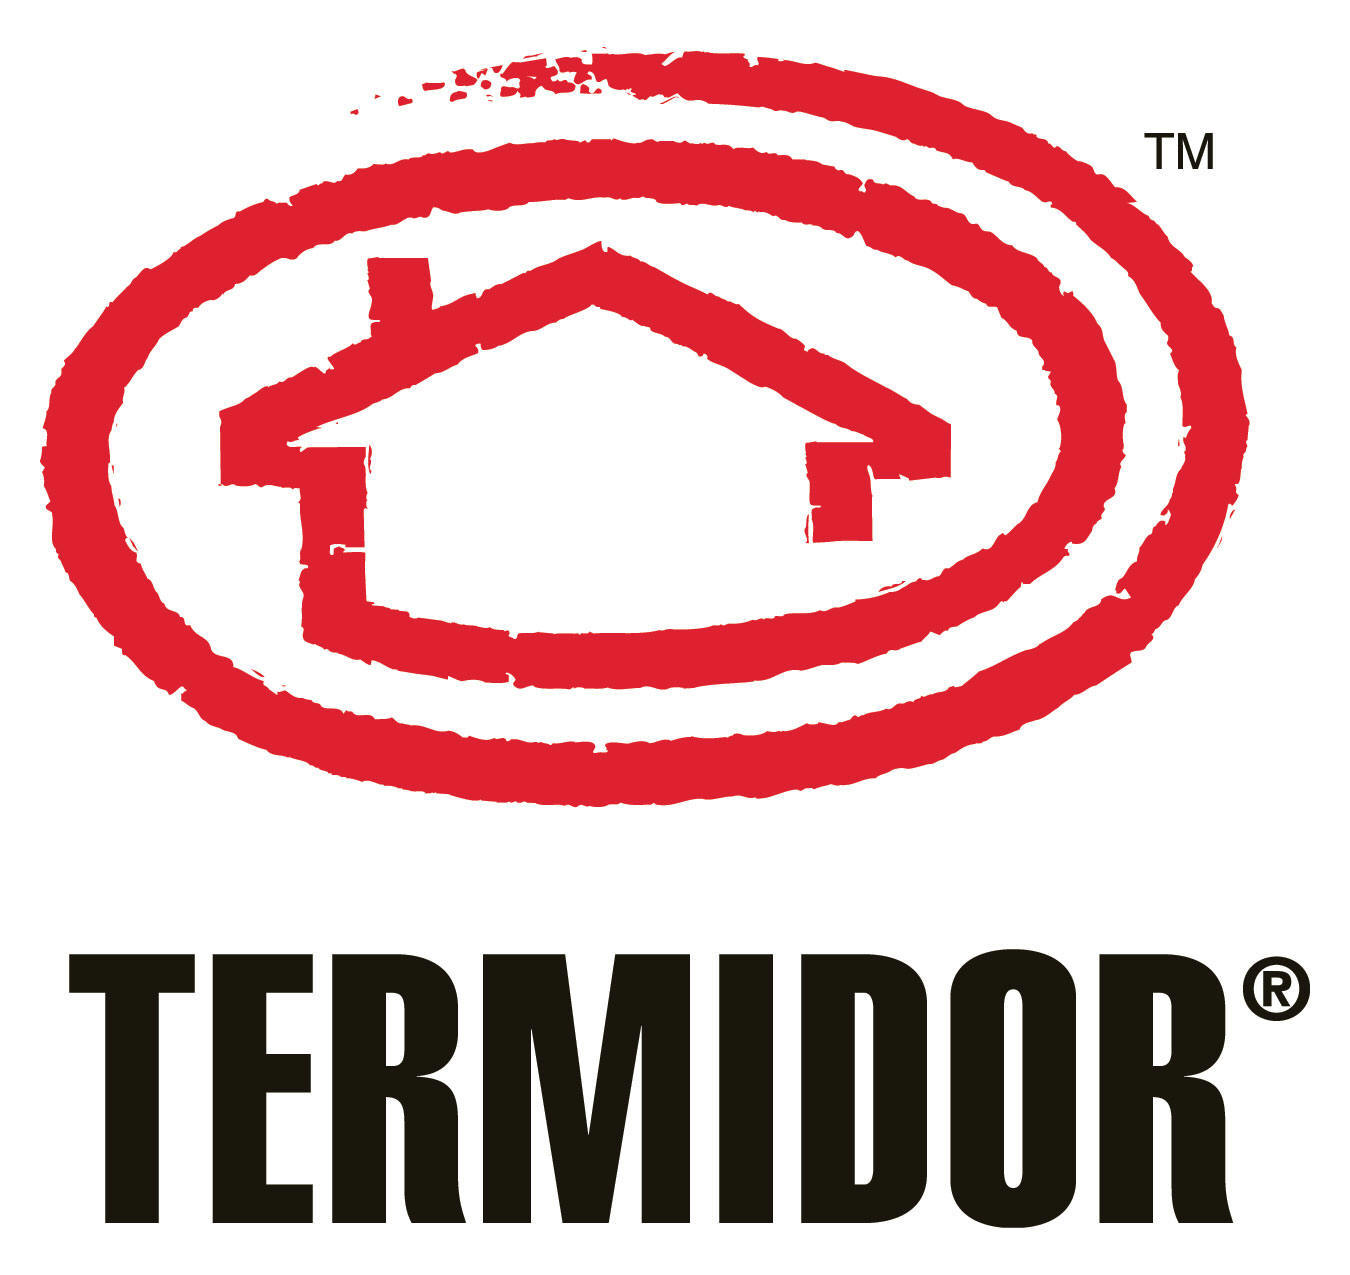 Termite Control, Termidor